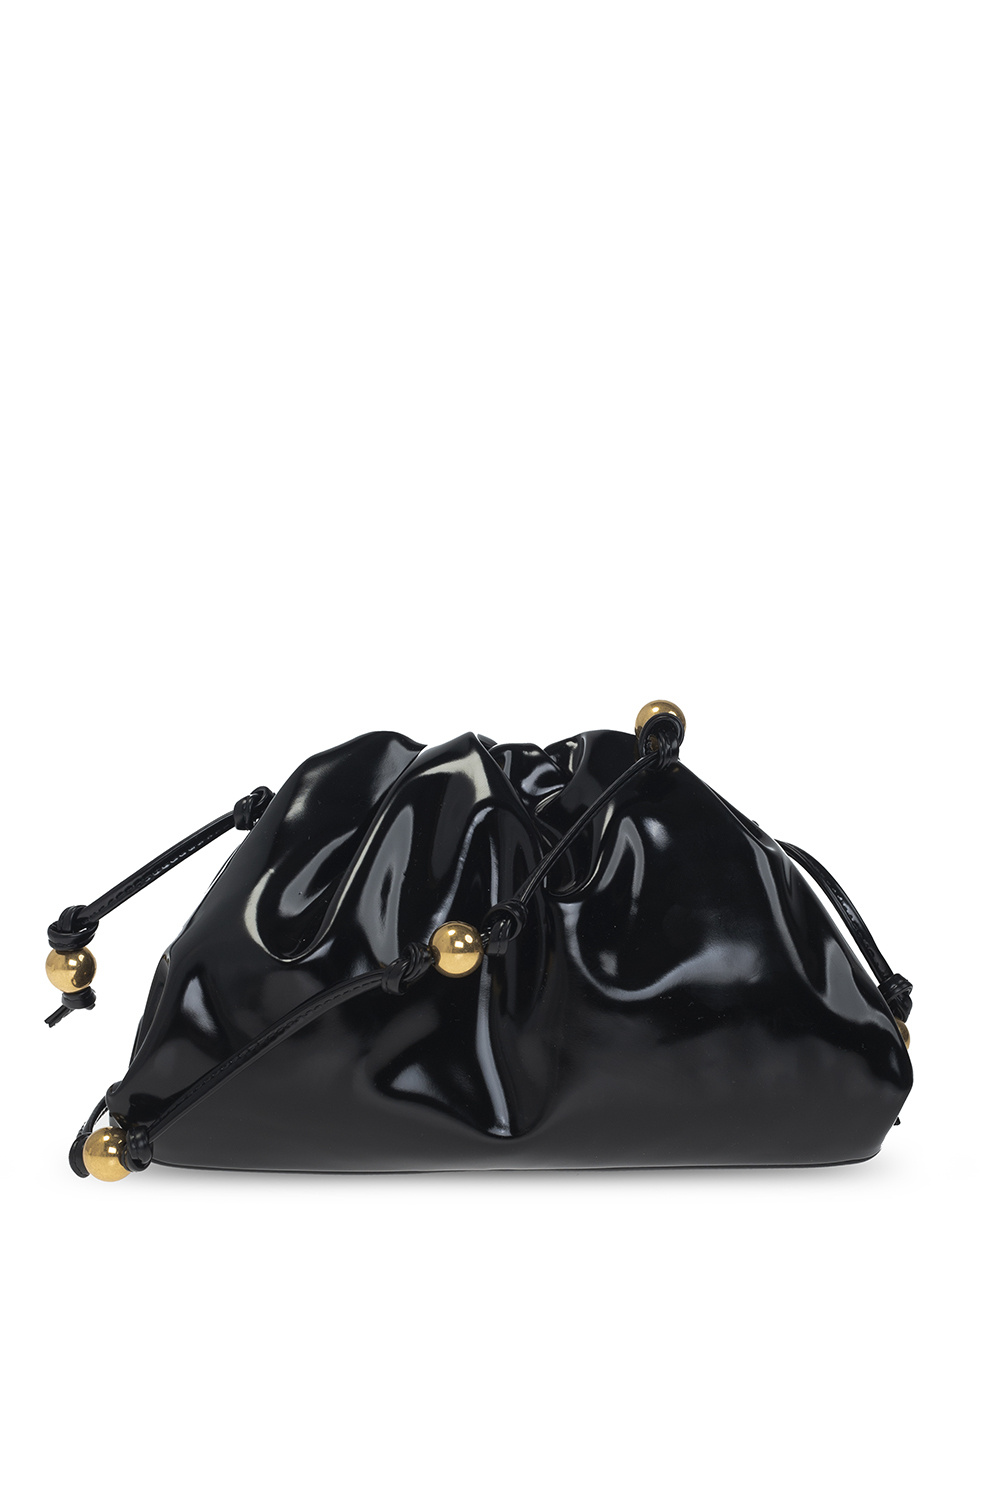 Louis Vuitton 10.5 mens shoes - clothing & accessories - by owner - apparel  sale - craigslist